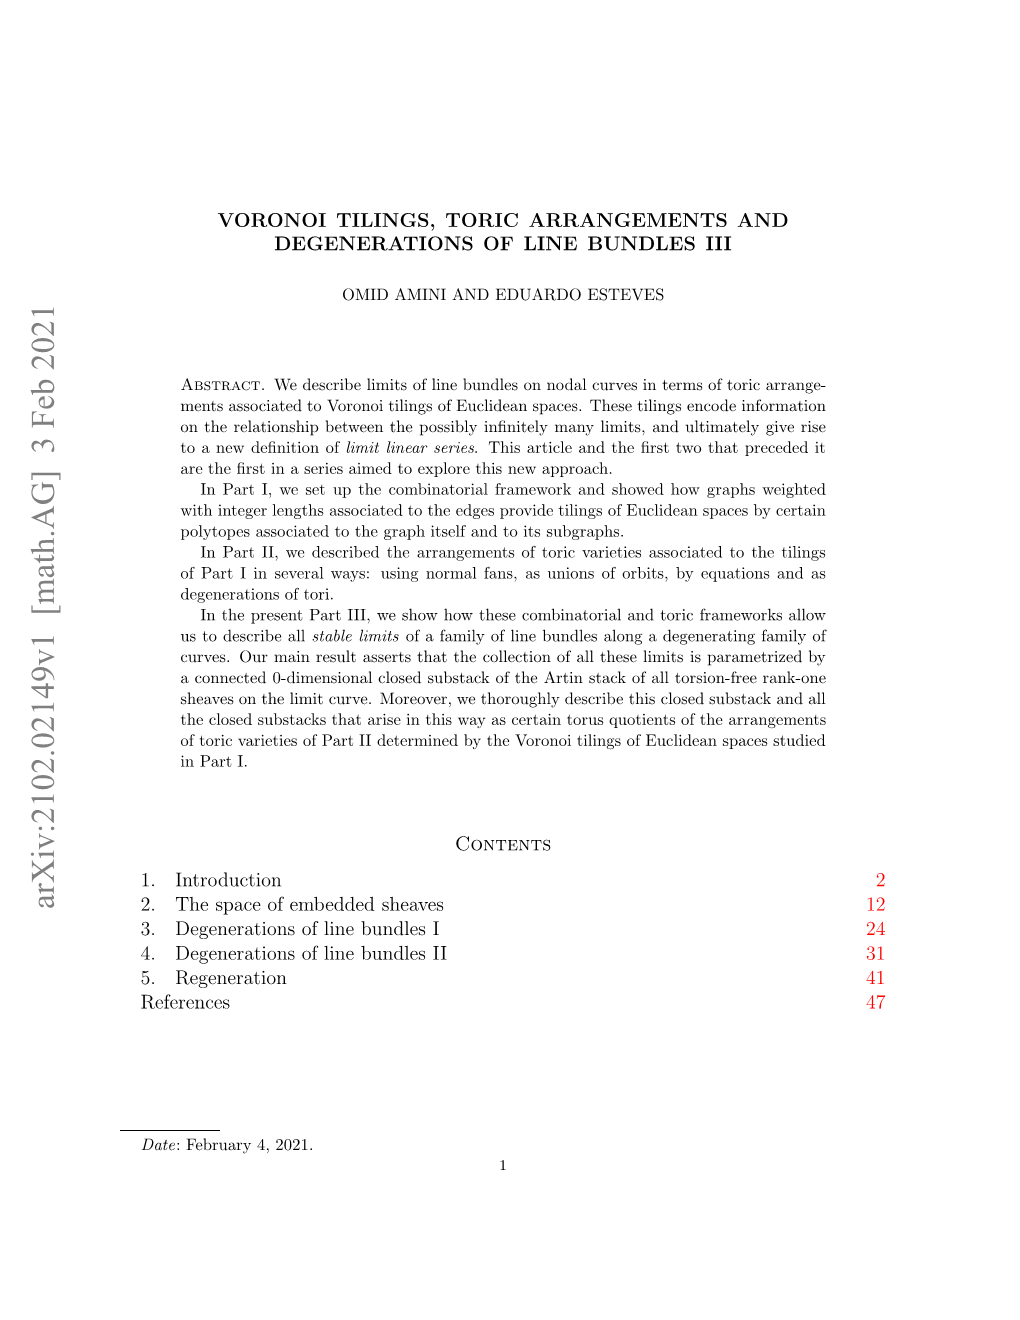 Voronoi Tilings and Degenerations of Line Bundles